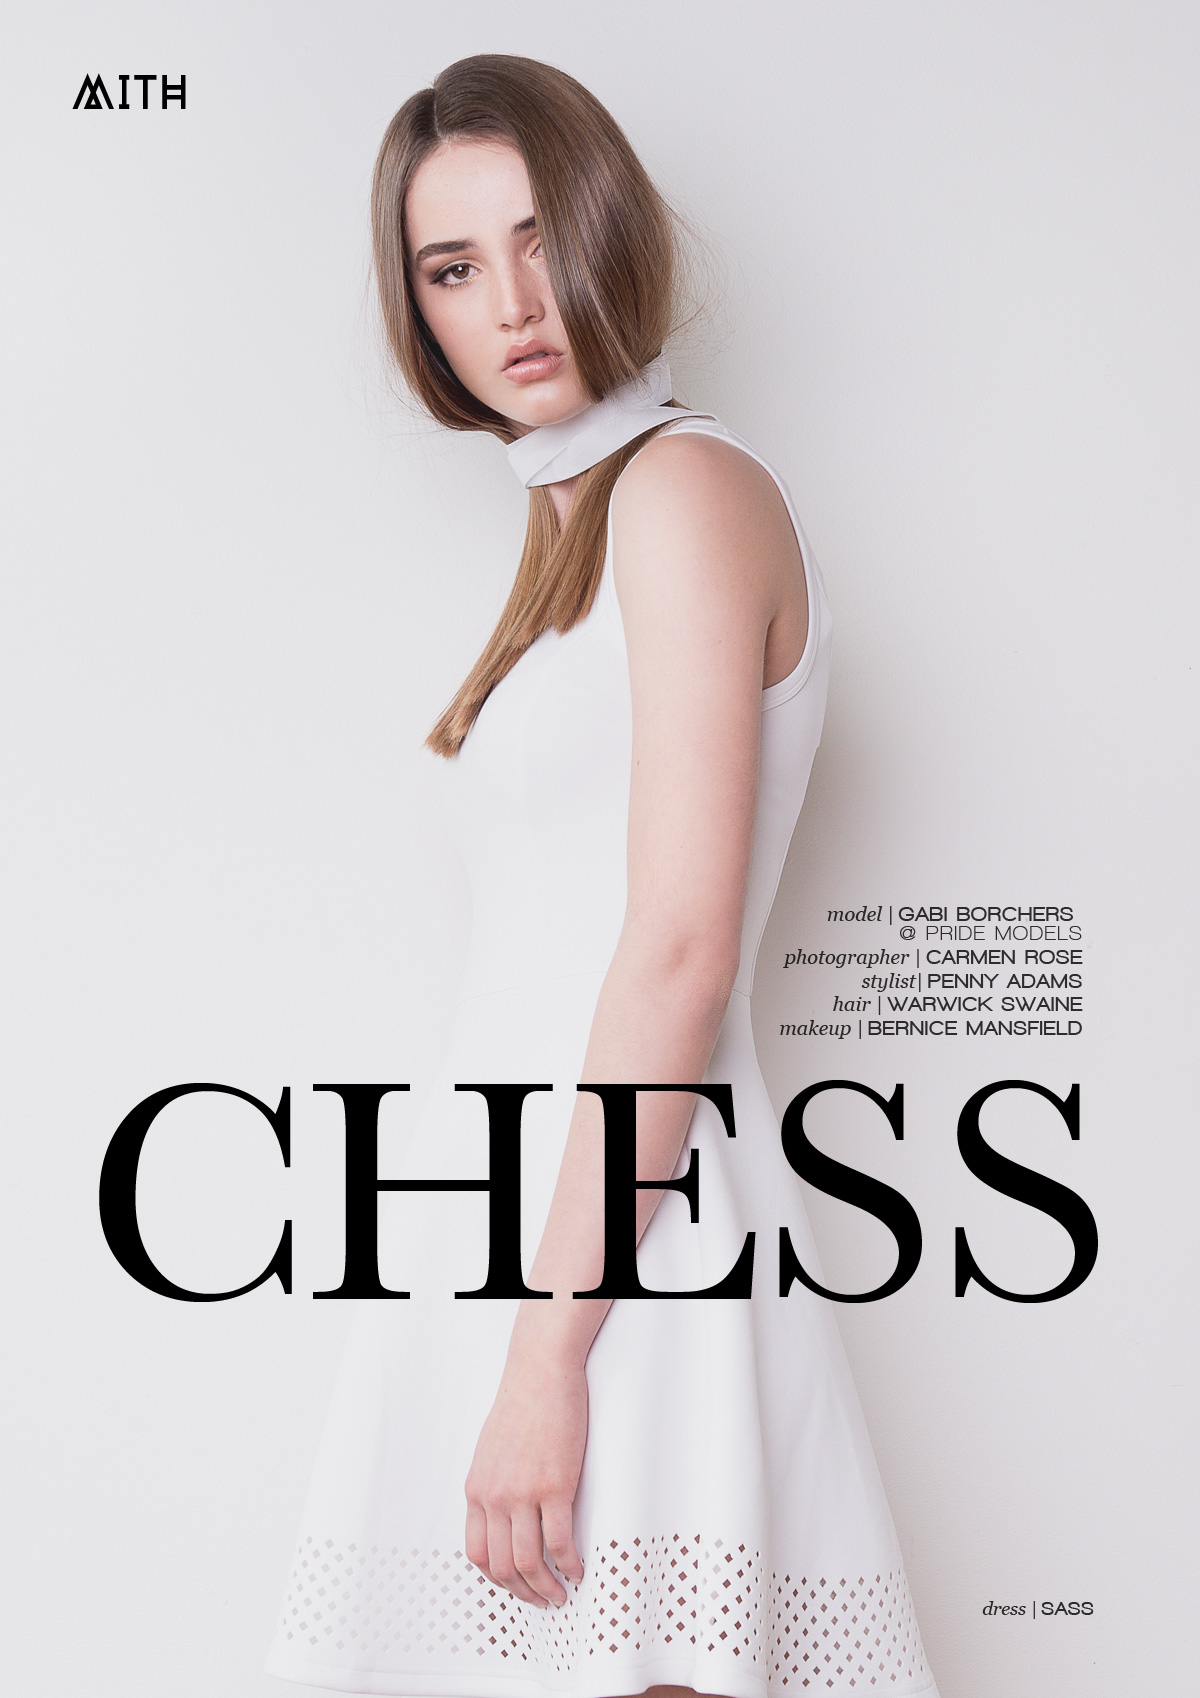 MITH_chess_gabi-borchers_carmen-hundley_web01